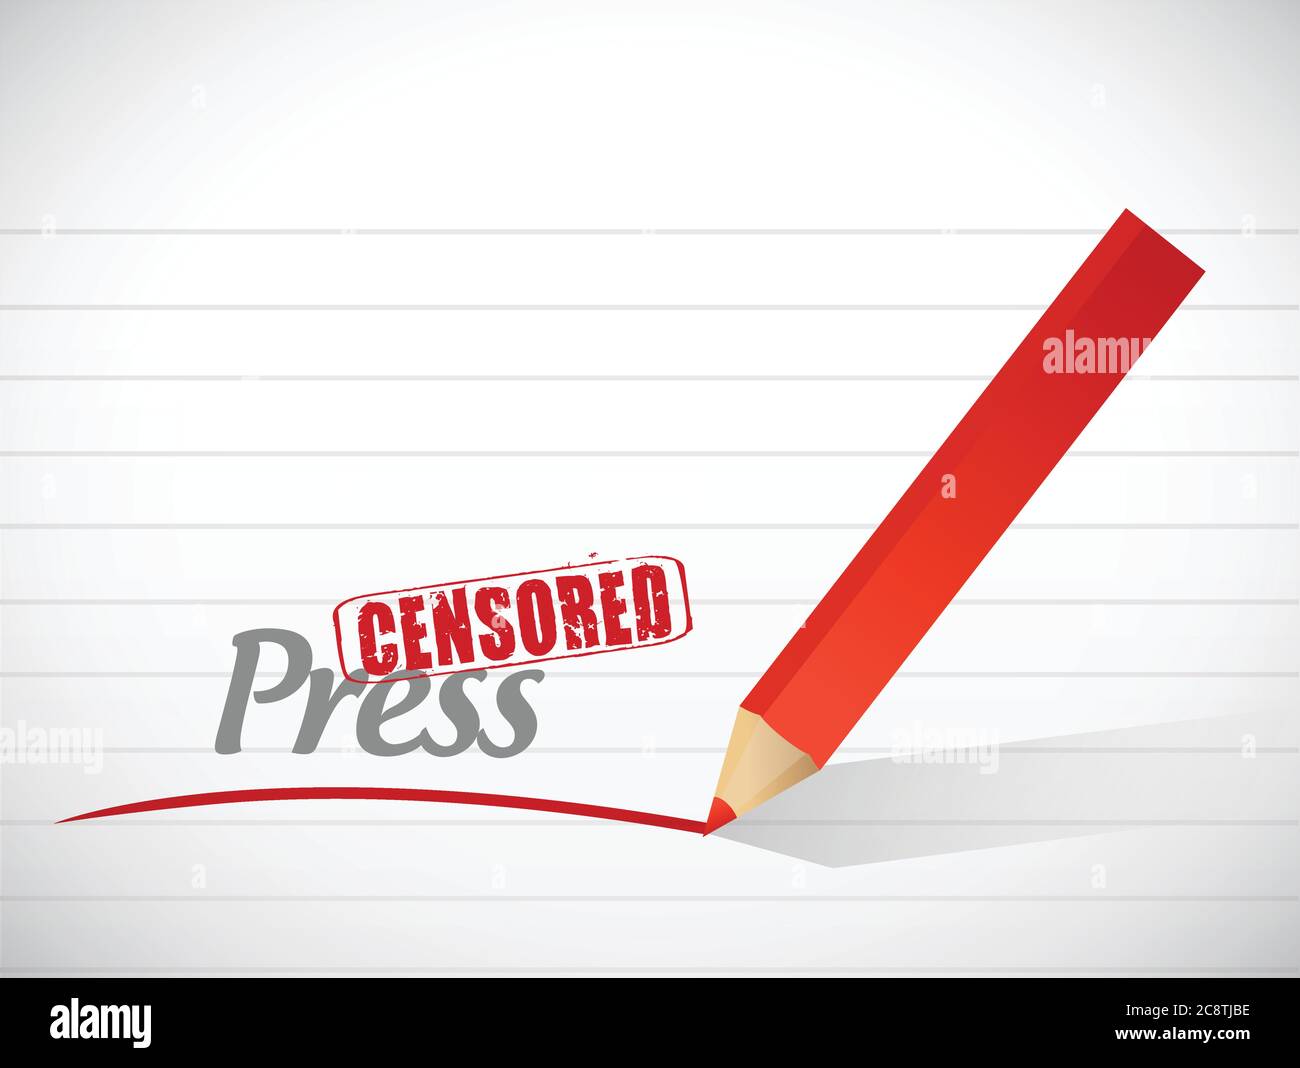 Censored press message illustration design over a white background Stock Vector